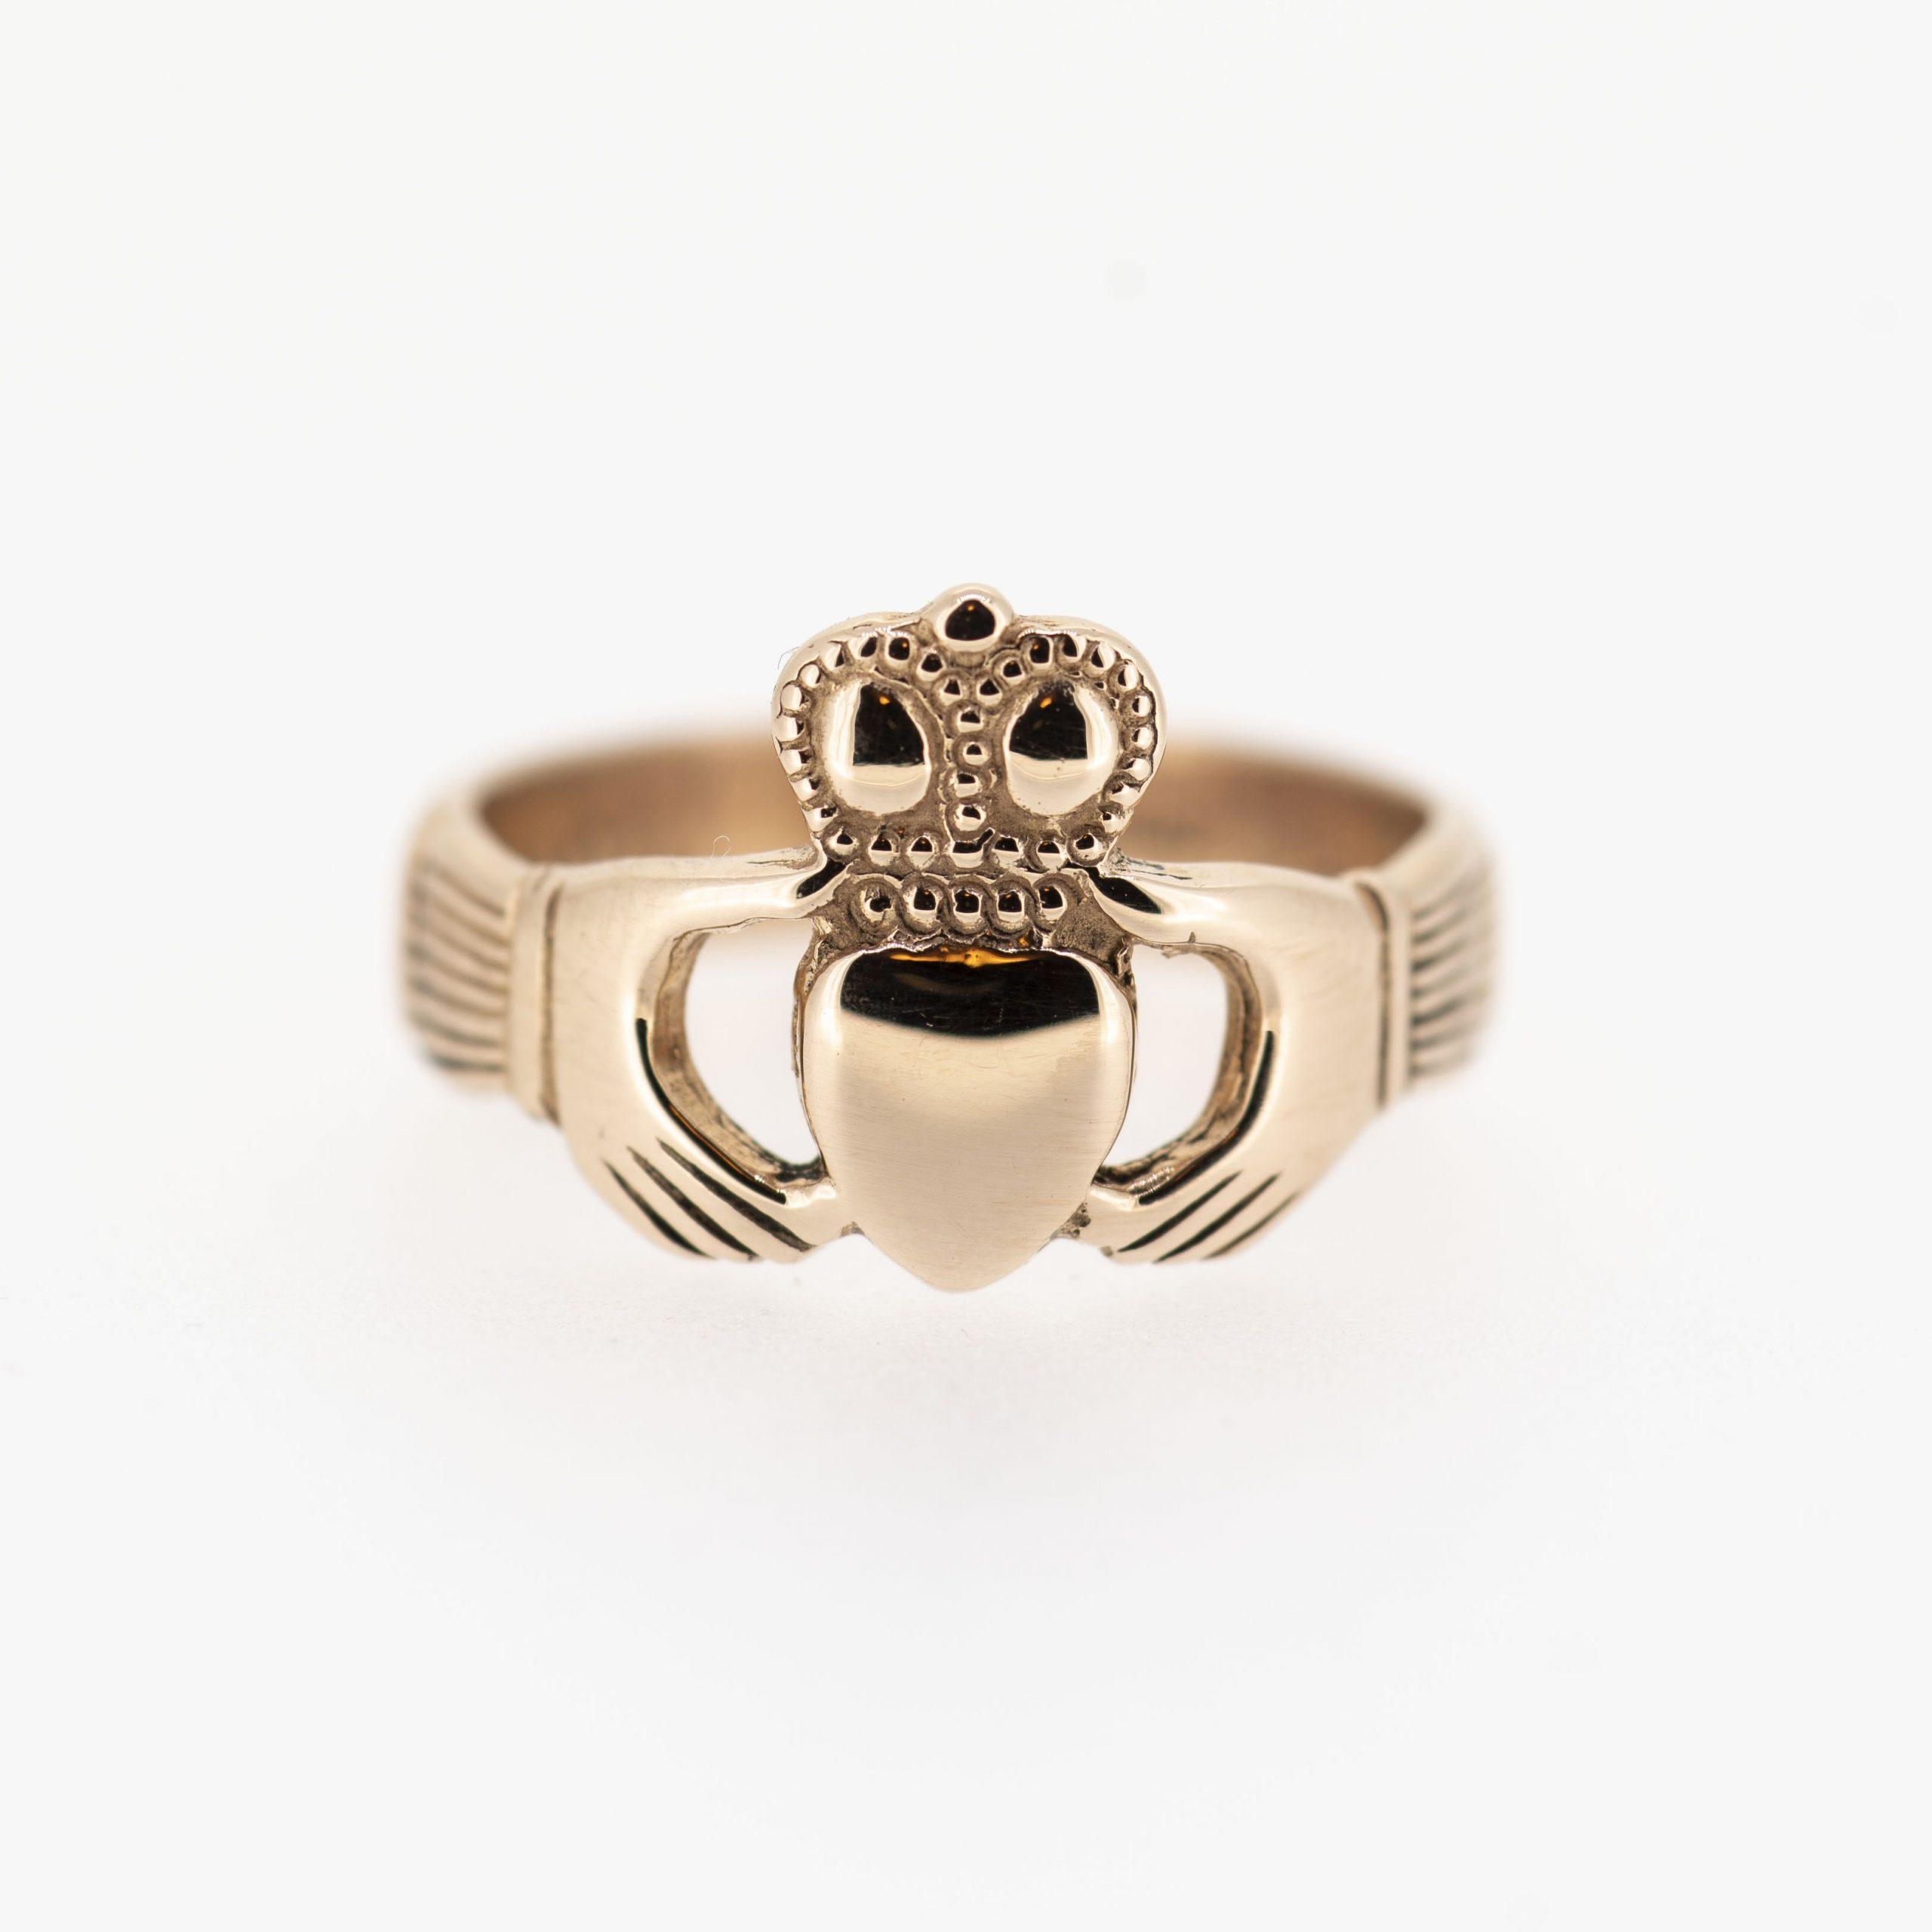 Jewellery Rings Wedding & Engagement Claddagh Rings Irish ring. Claddagh ring Handcrafted in Ireland ladies classic Irish claddagh ring 